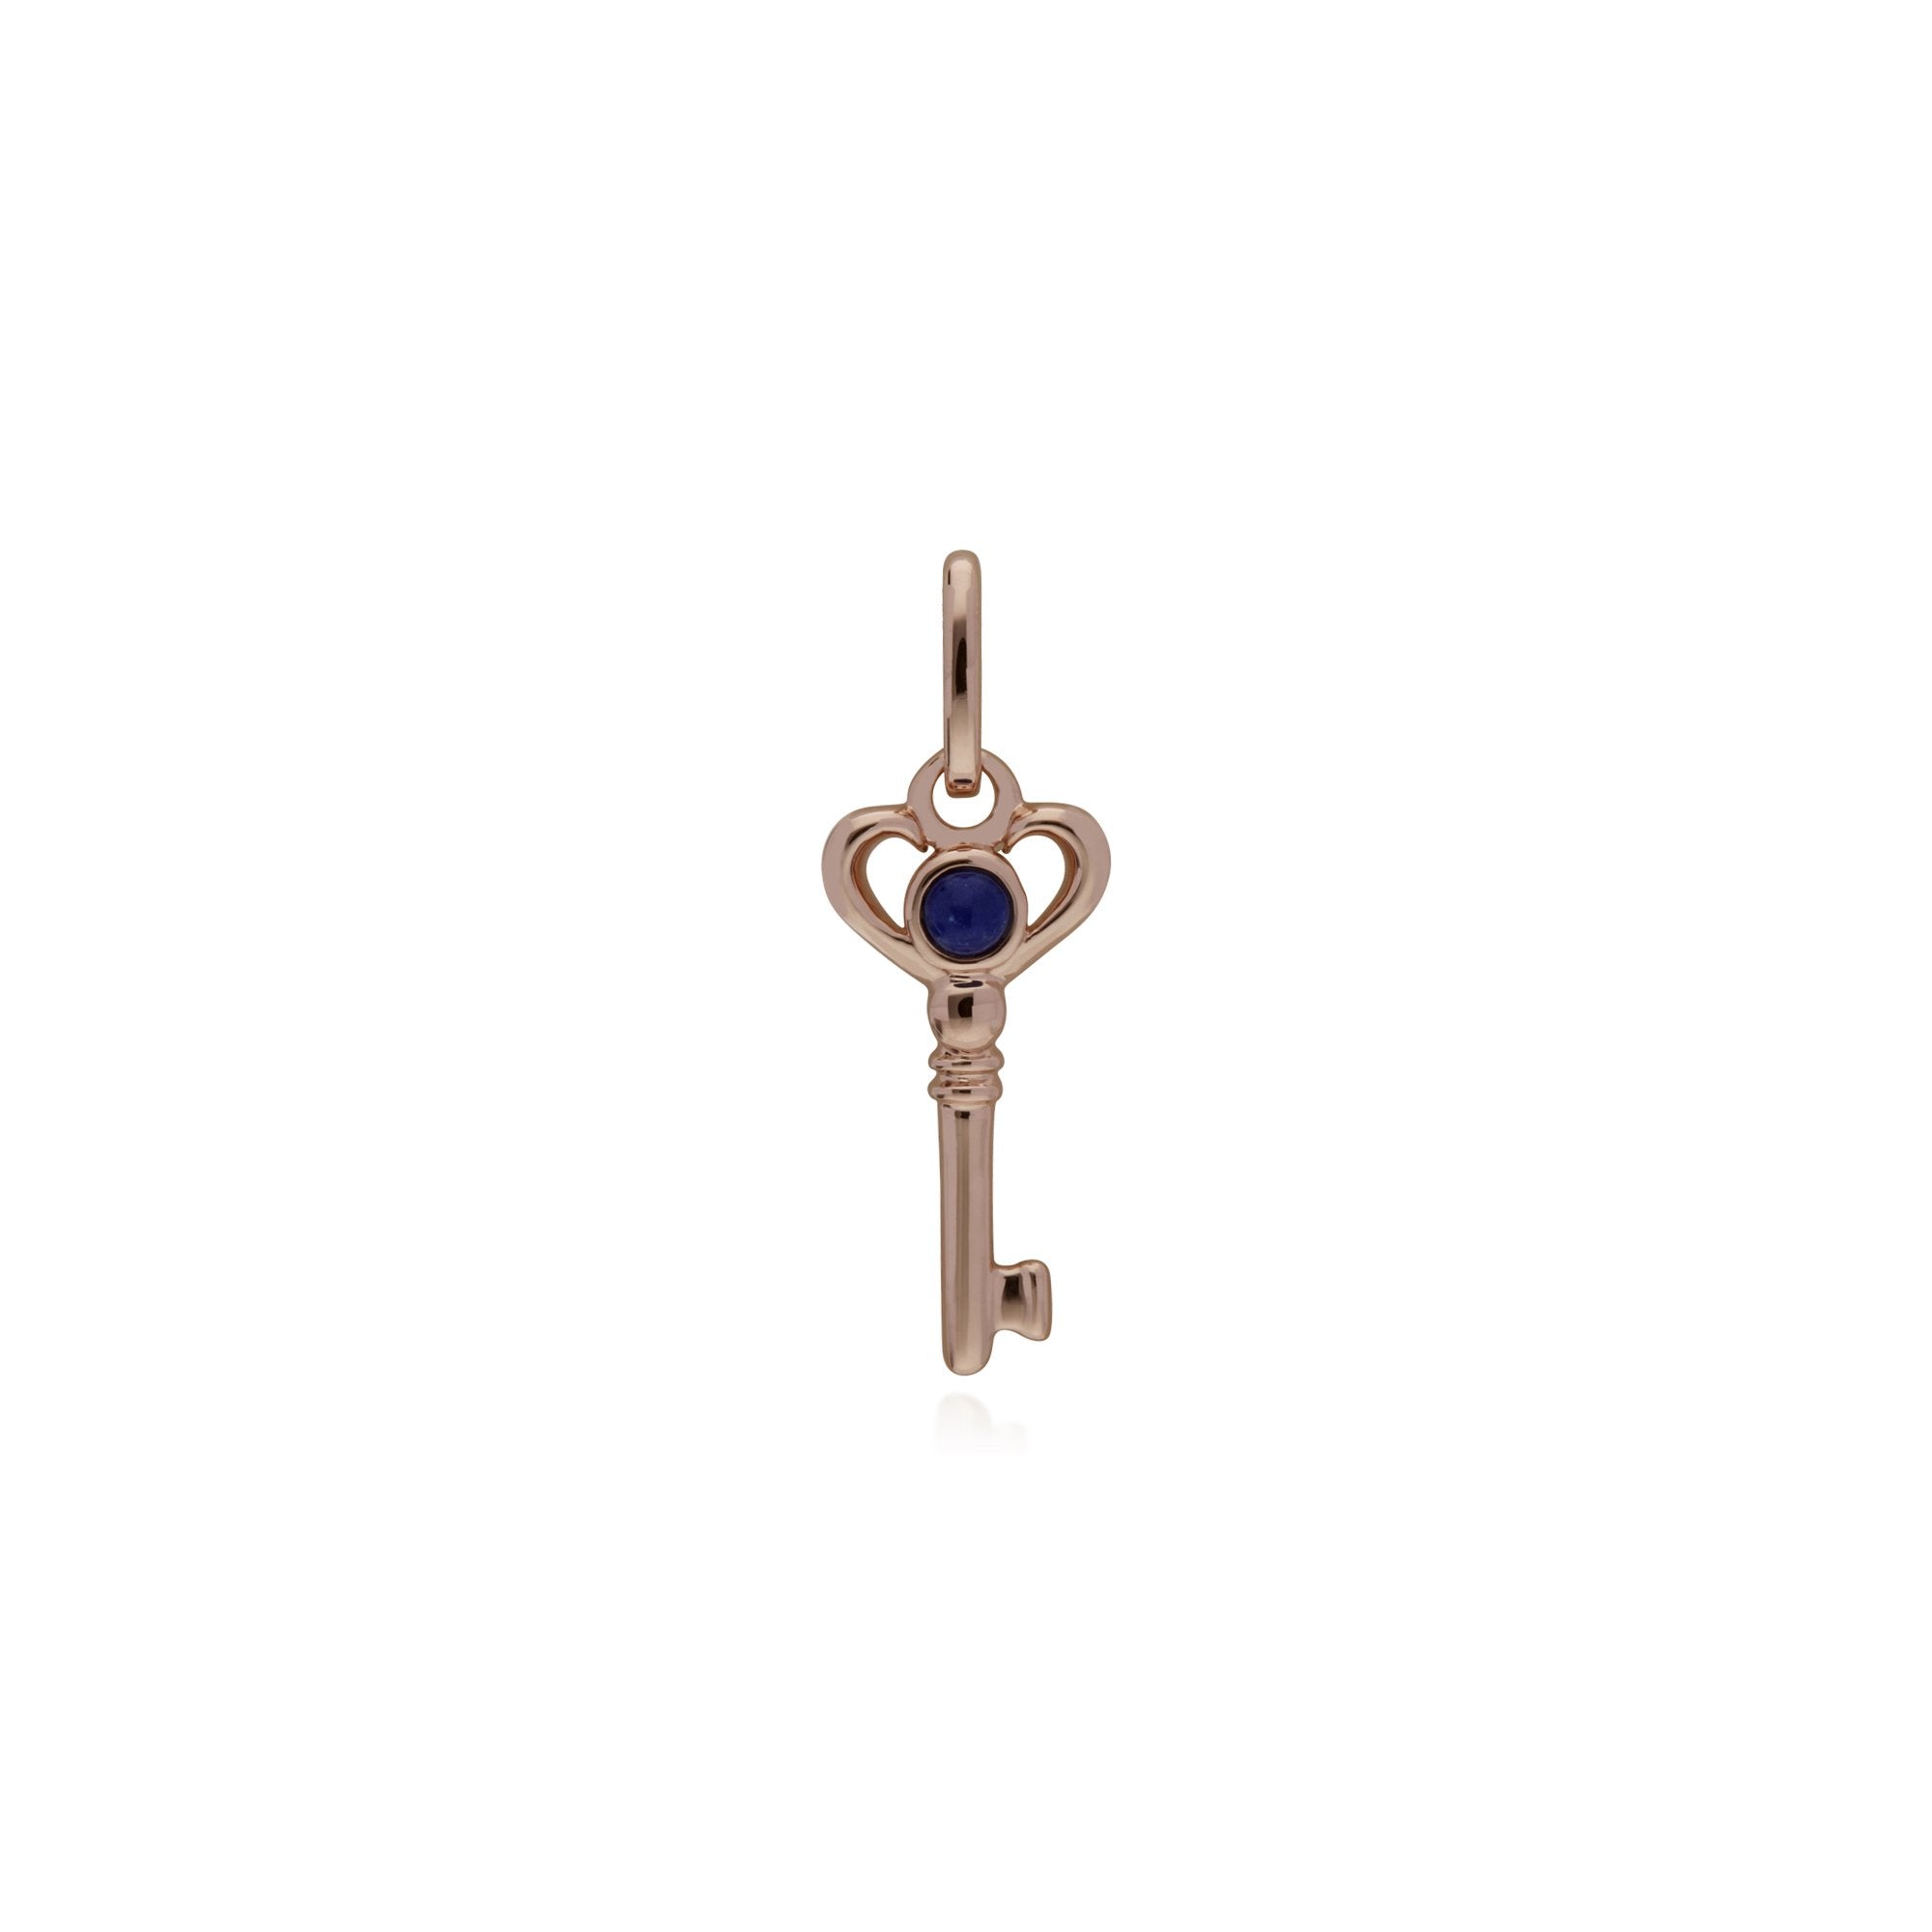 Gemondo Rose Gold Plated Sterling Silver Lapis Lazuli Small Key Charm